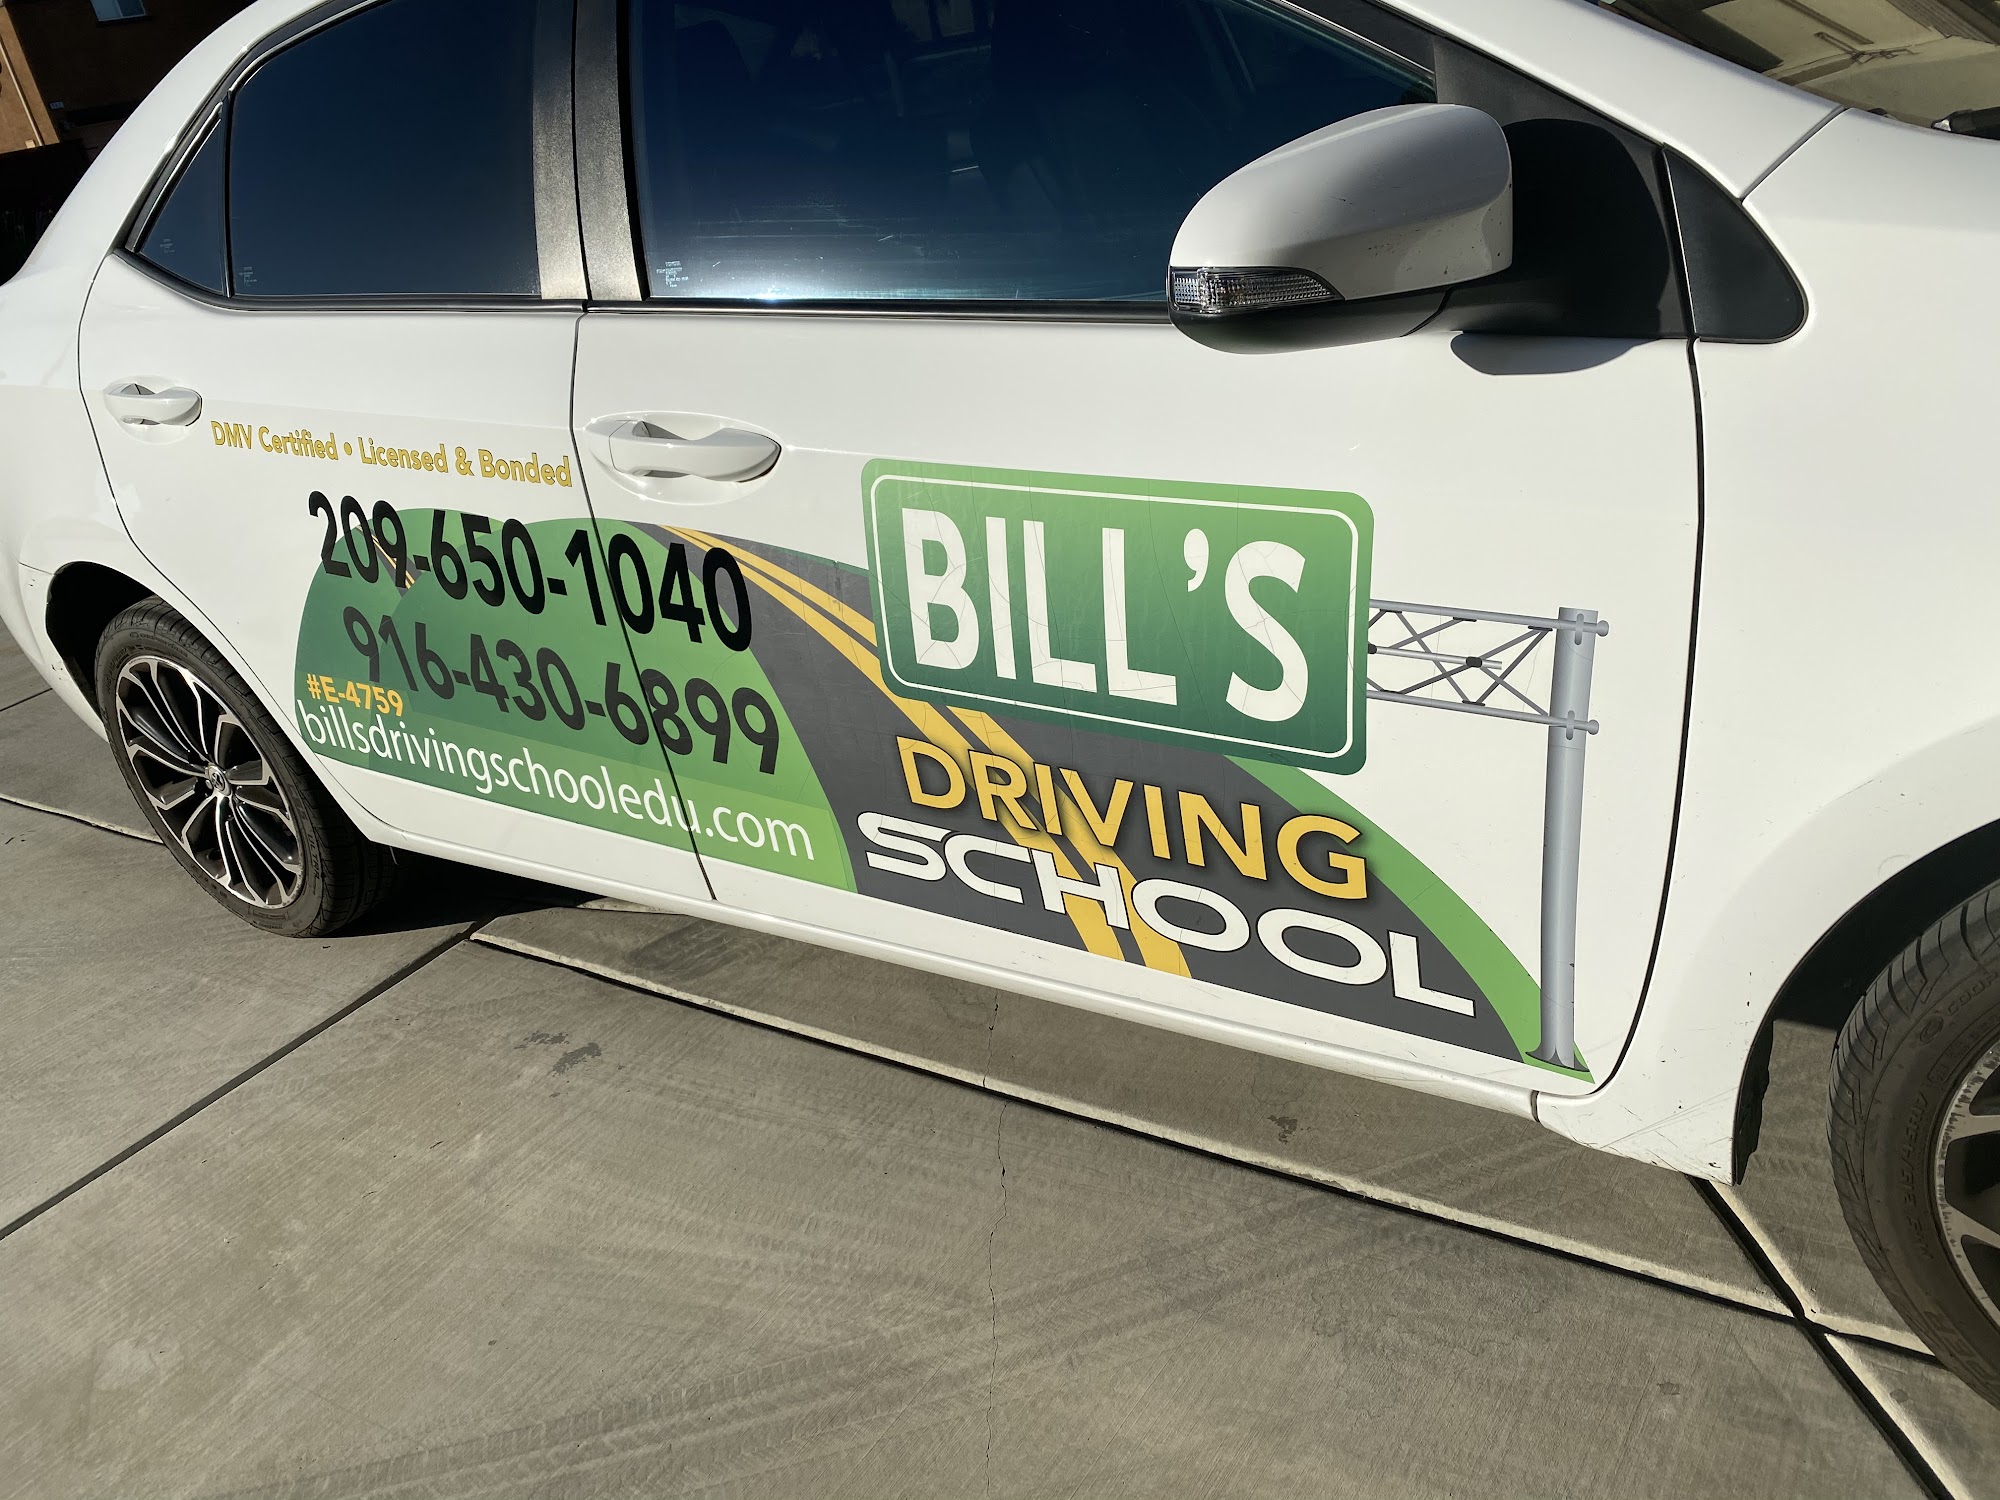 Bill's Driving School